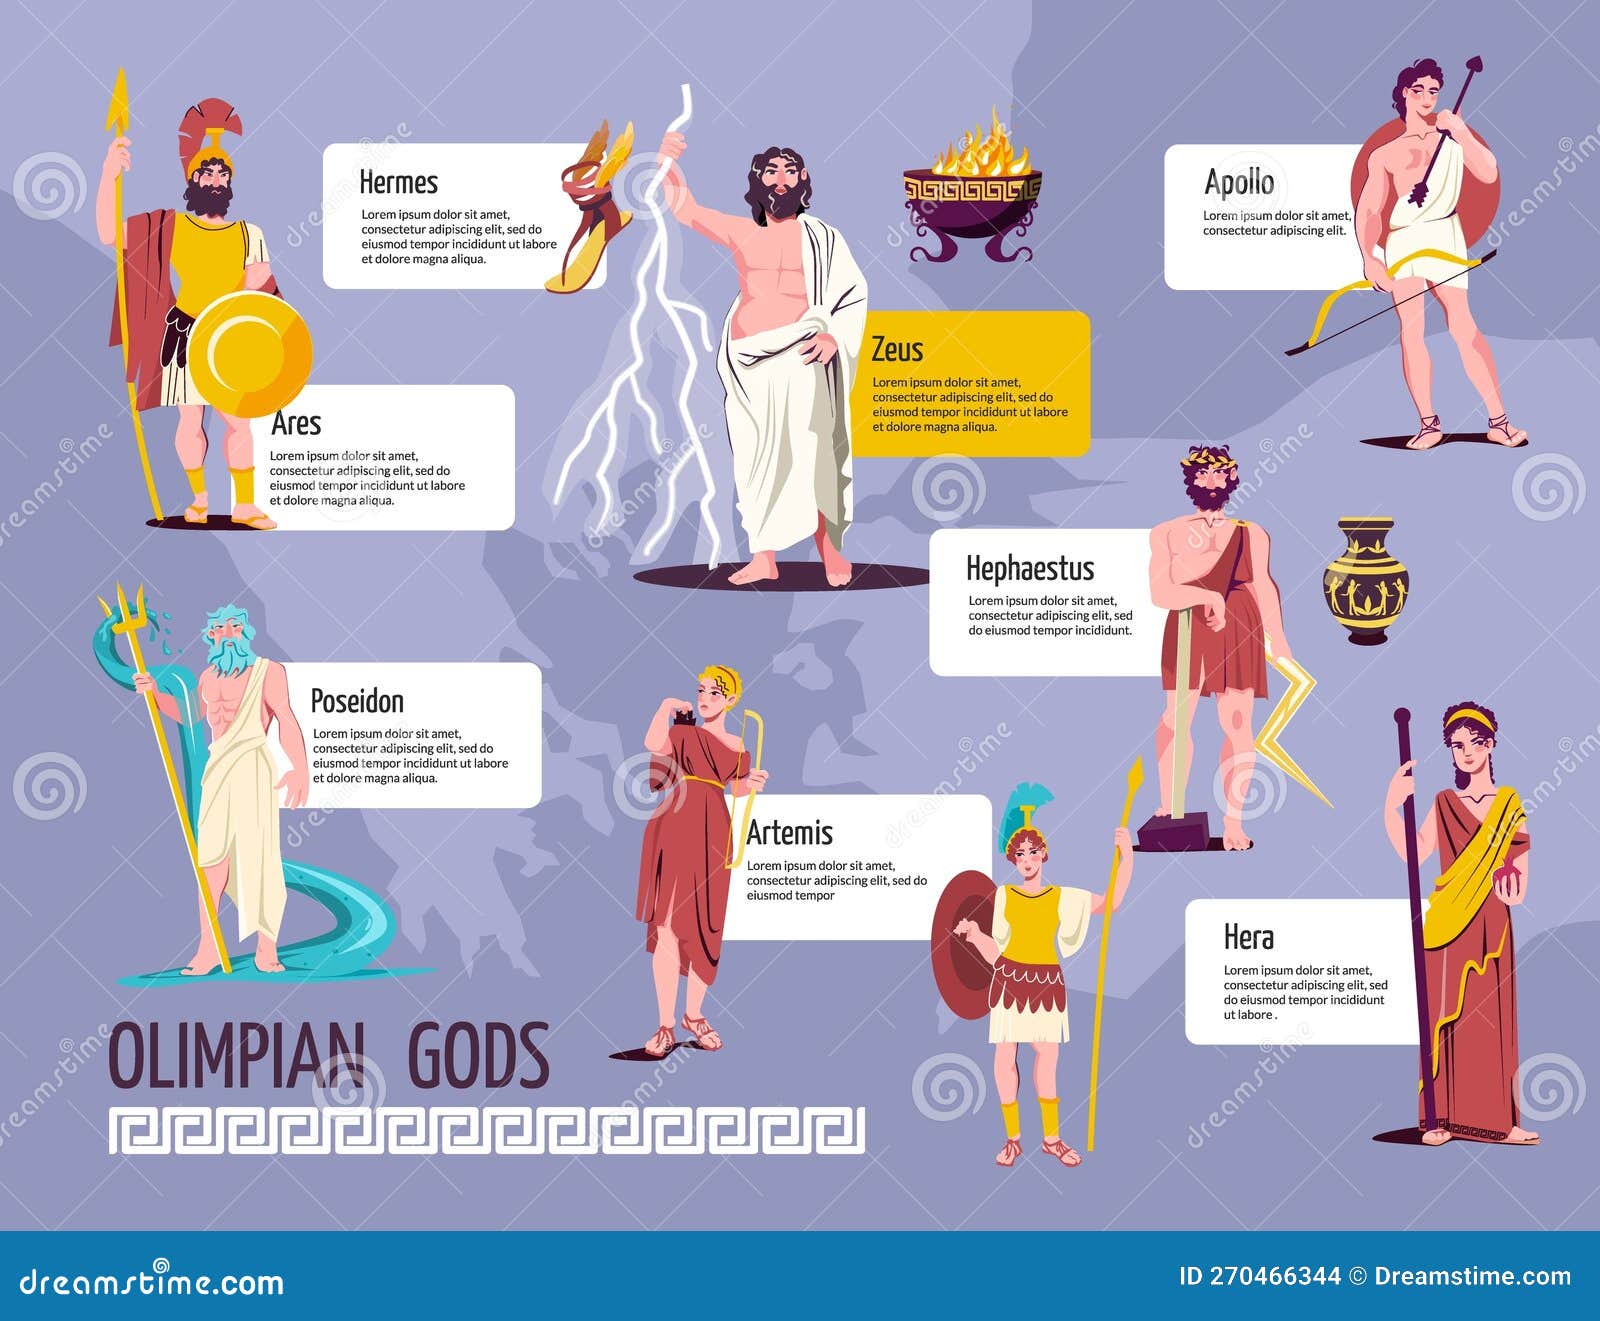 olympian gods flat infographic